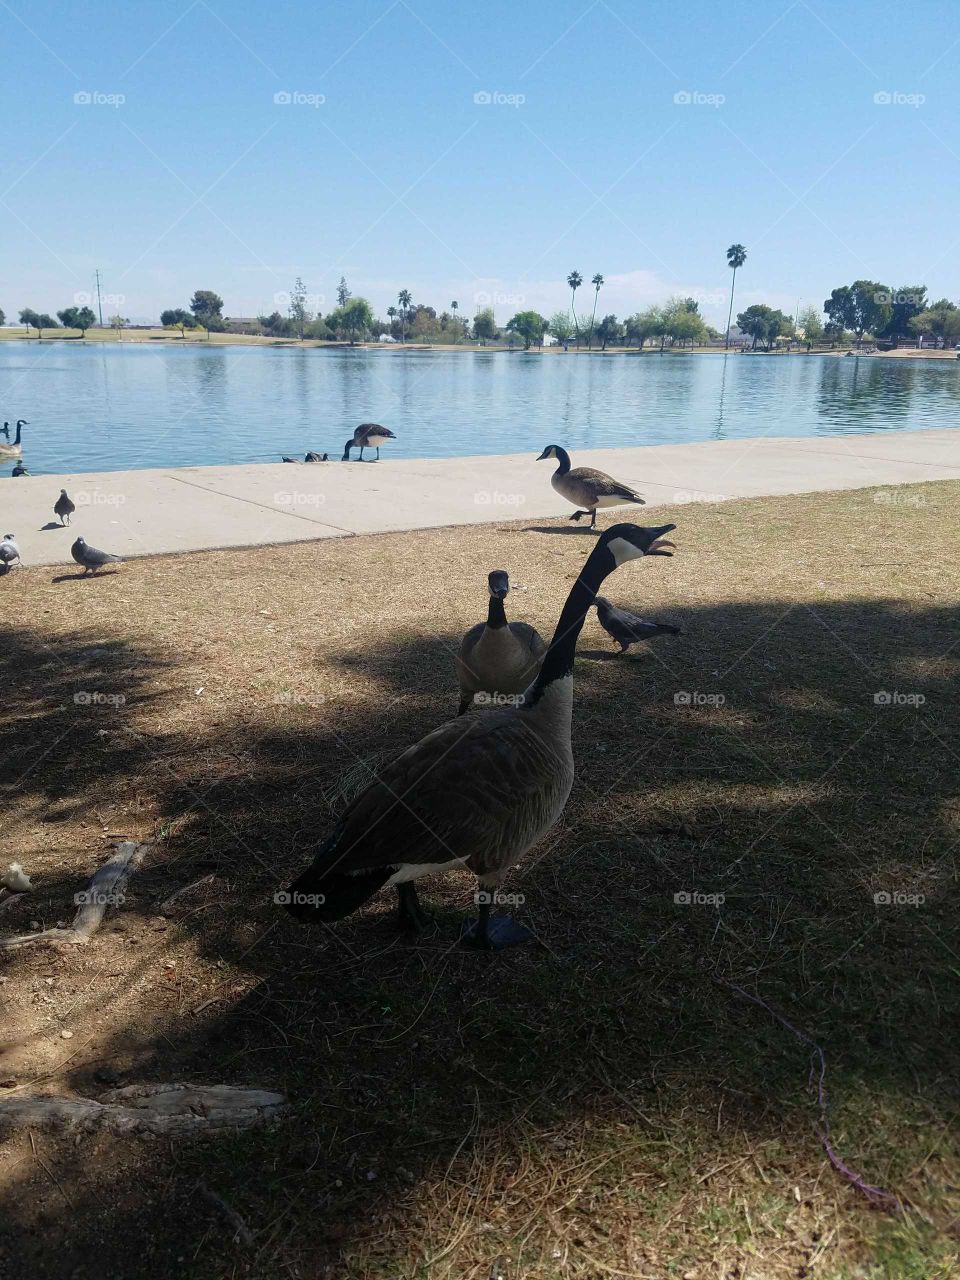 park geese